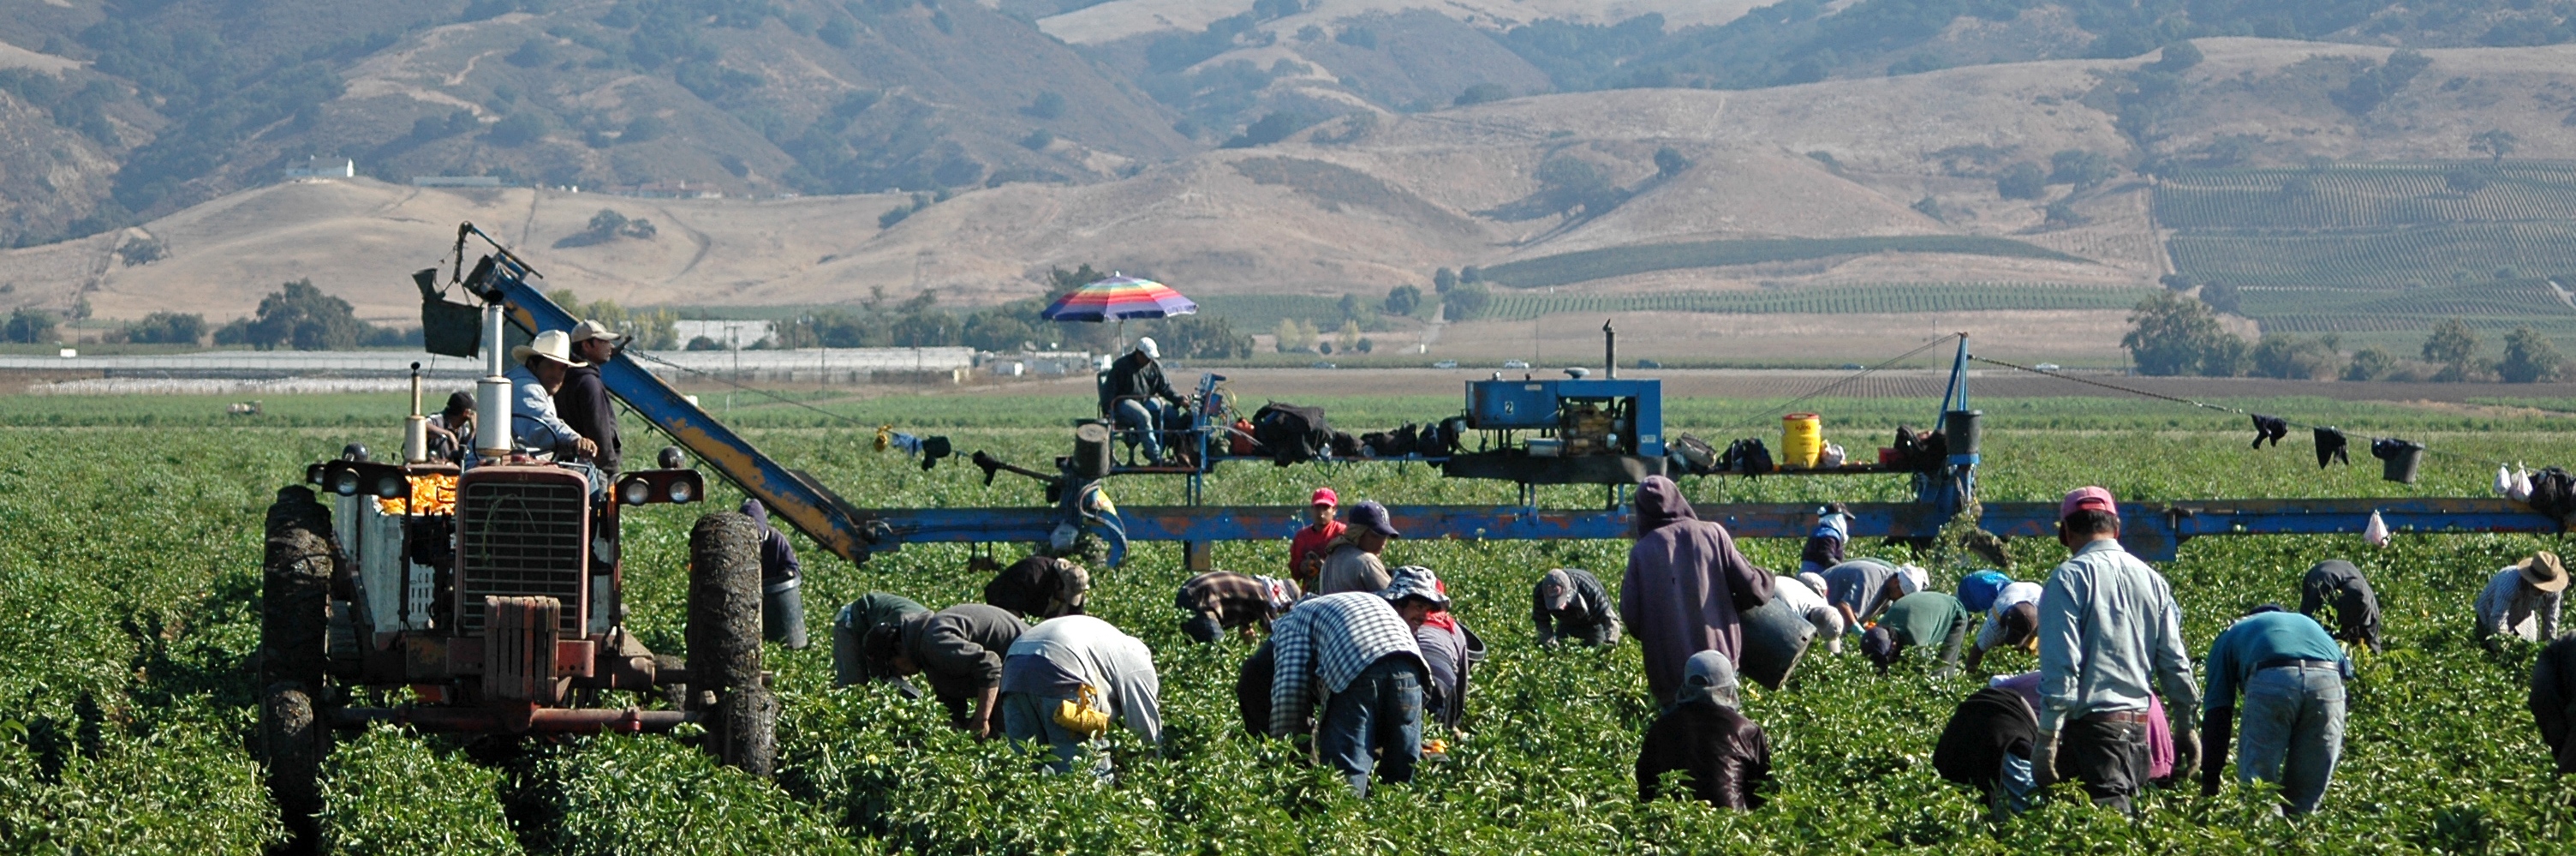 Image of farm laborers